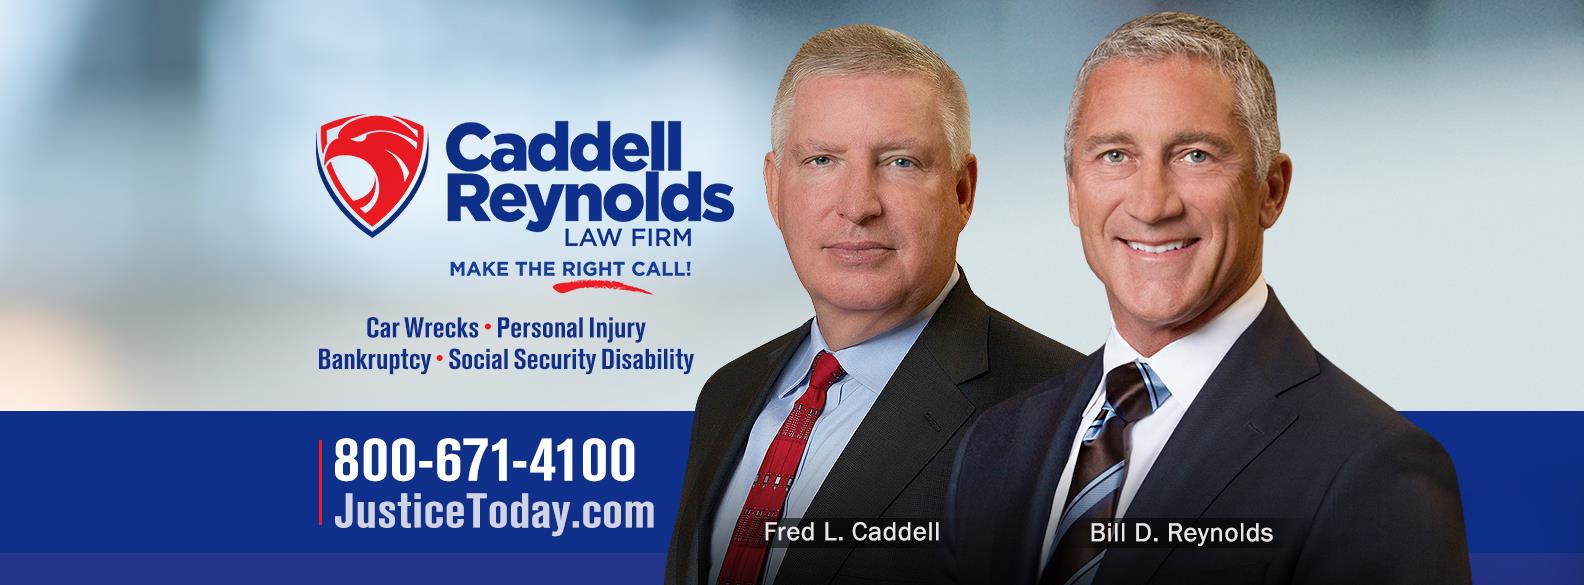 Caddell Reynolds Law Firm - Jonesboro (AR 72401), US, auto accident lawyer jonesboro